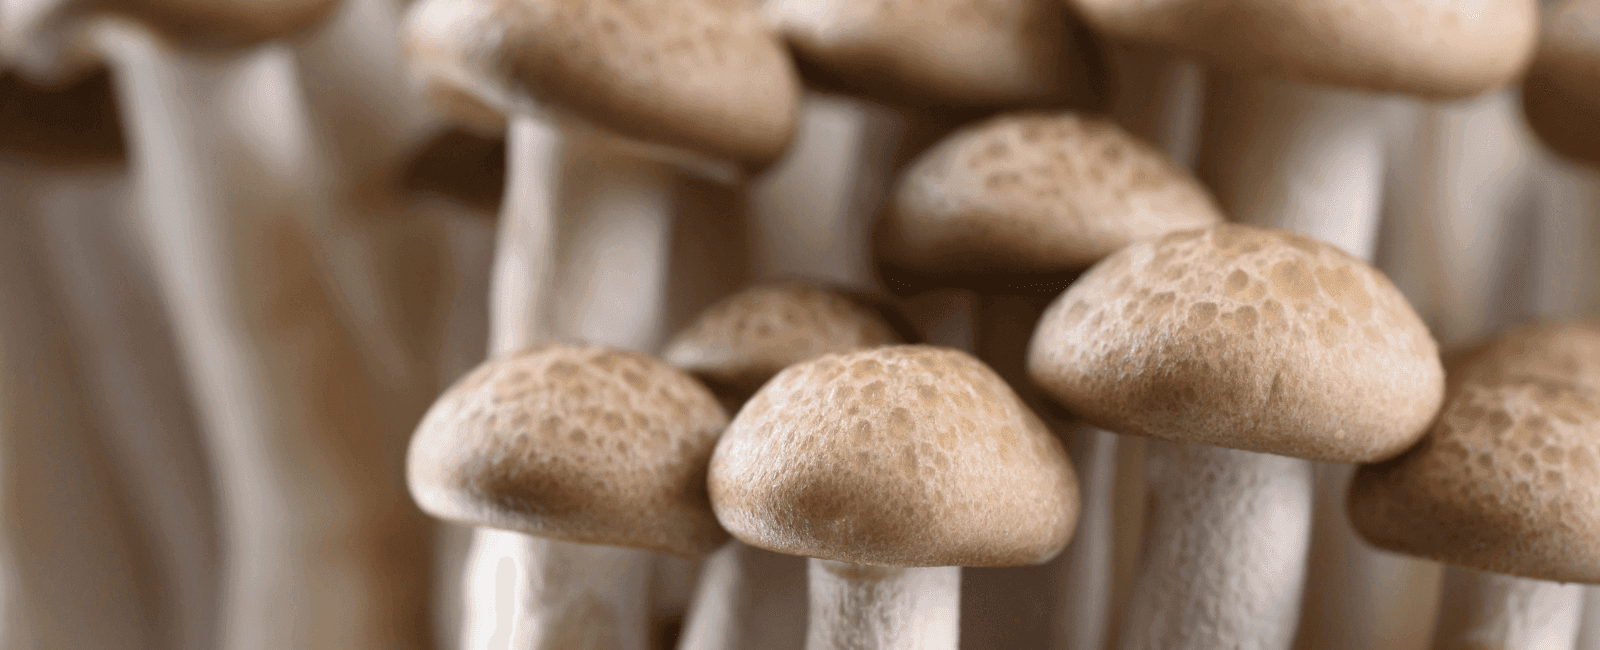 12 Simple, Yet Delicious Shimeji Mushroom Recipes